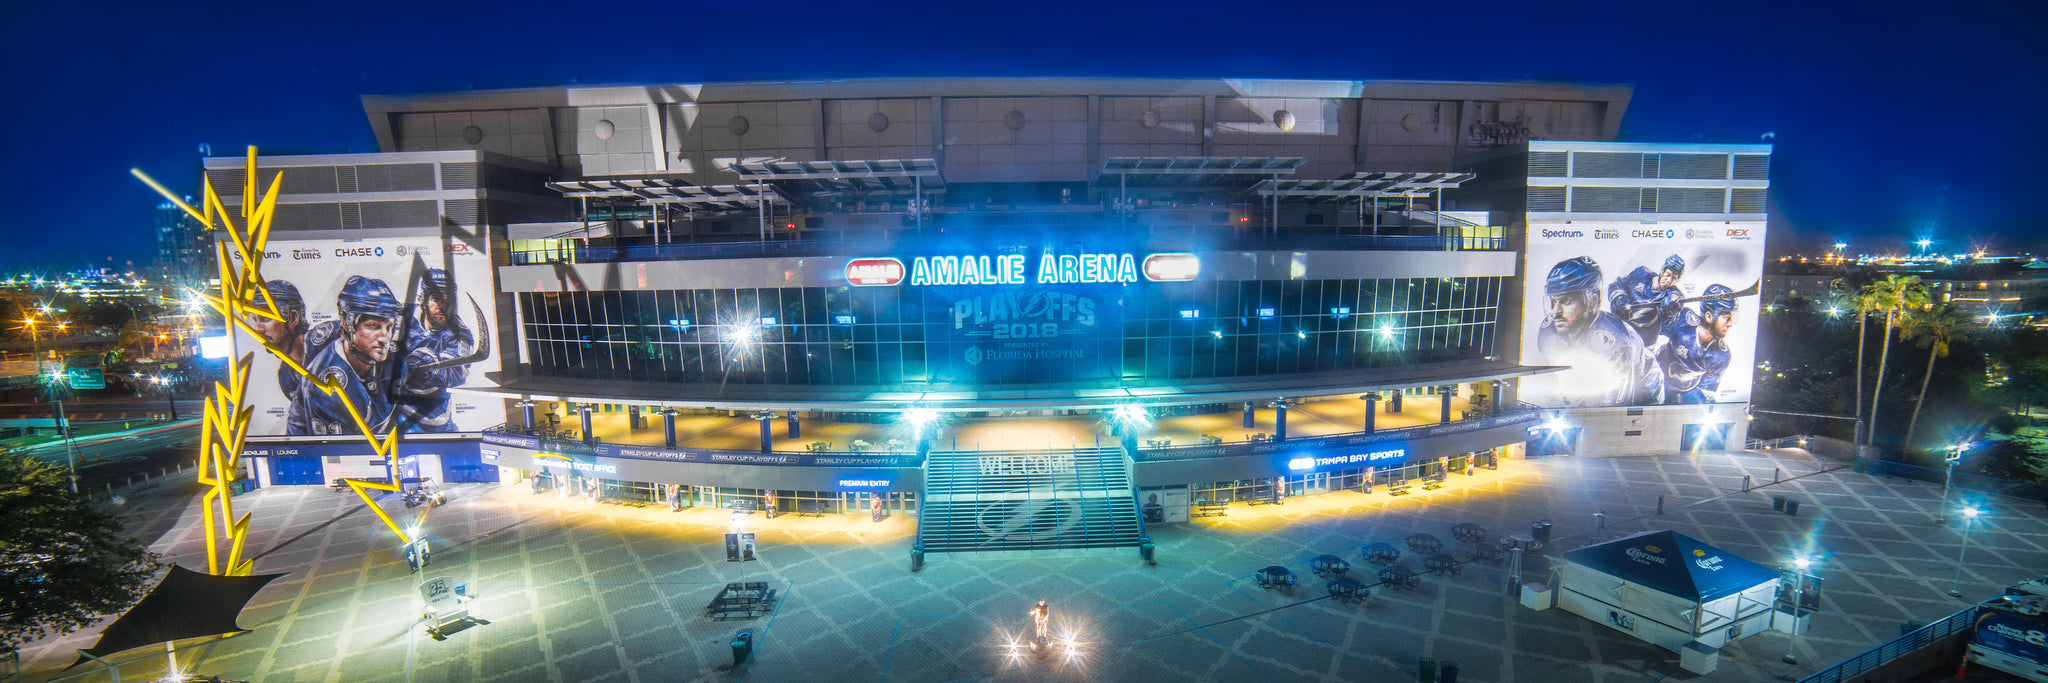 The Tampa Bay Lightning Amalie Arena – Craig Alexander Photography